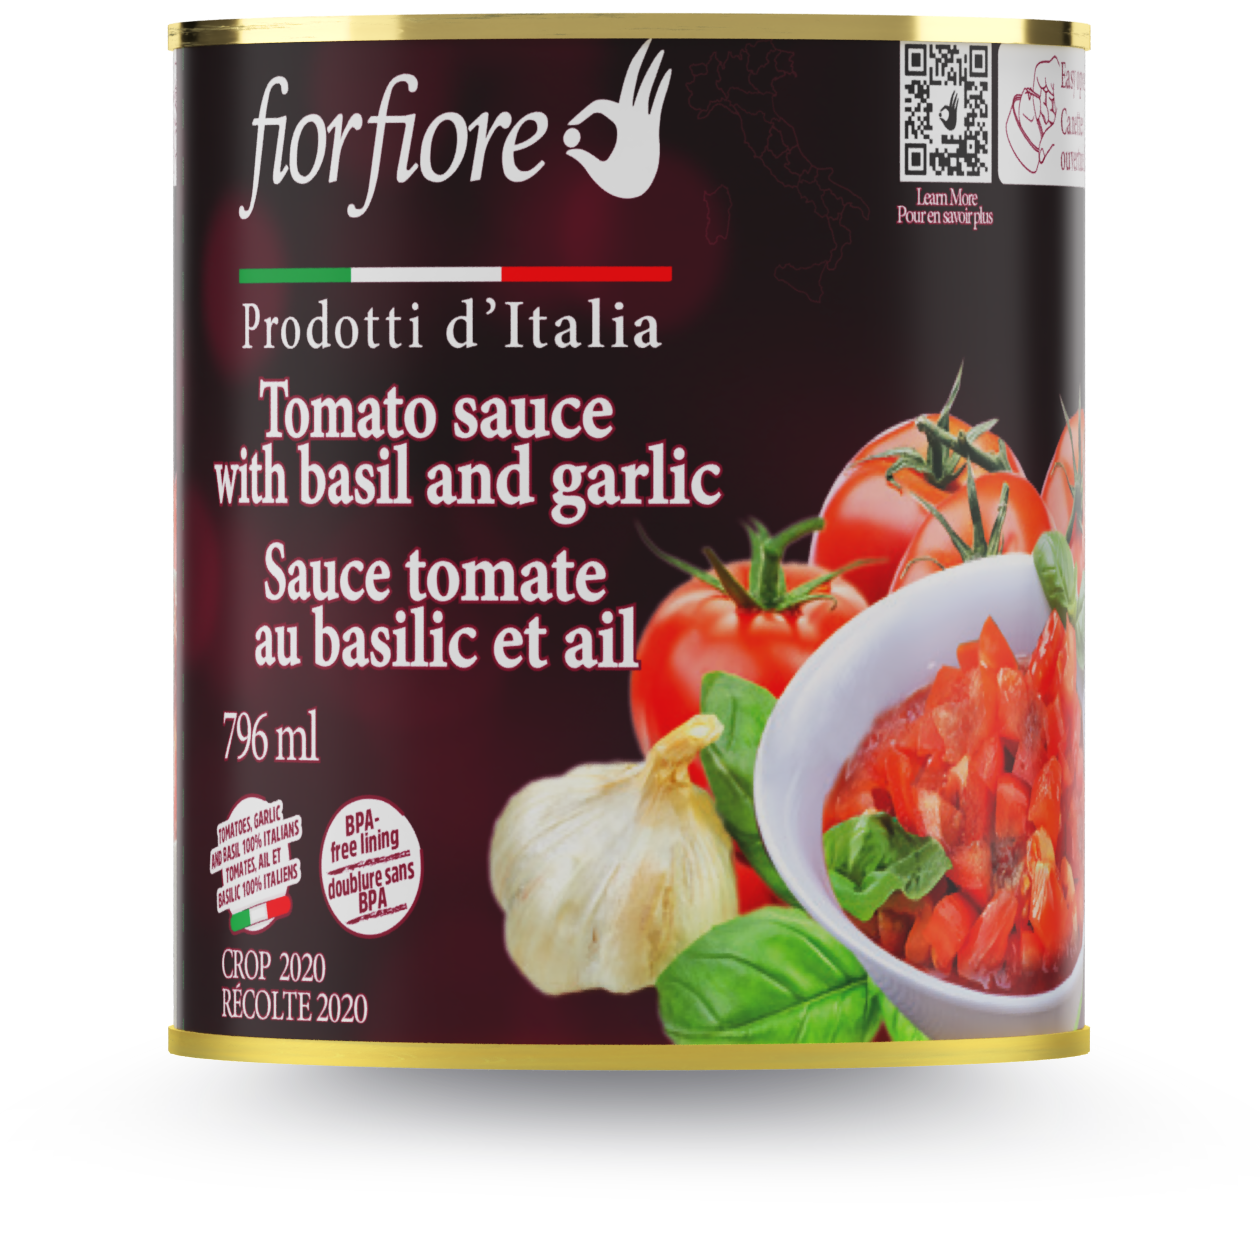 Tomato sauce with basil and garlic